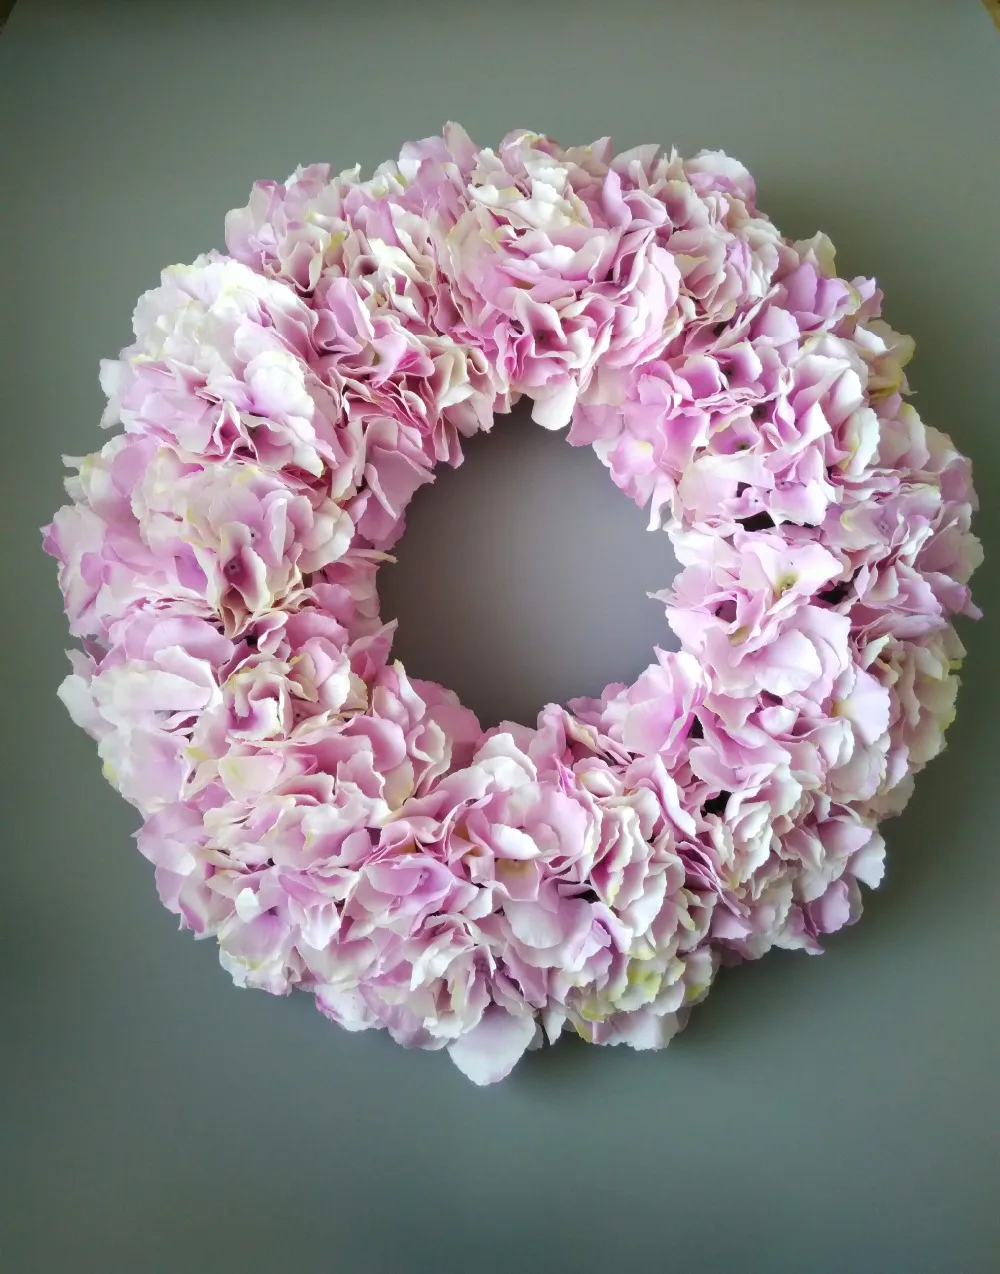 Image wedding decorative wreaths,dream pink hydrangea wreaths,front door wreath 16 inches, party birthday decoration flowers